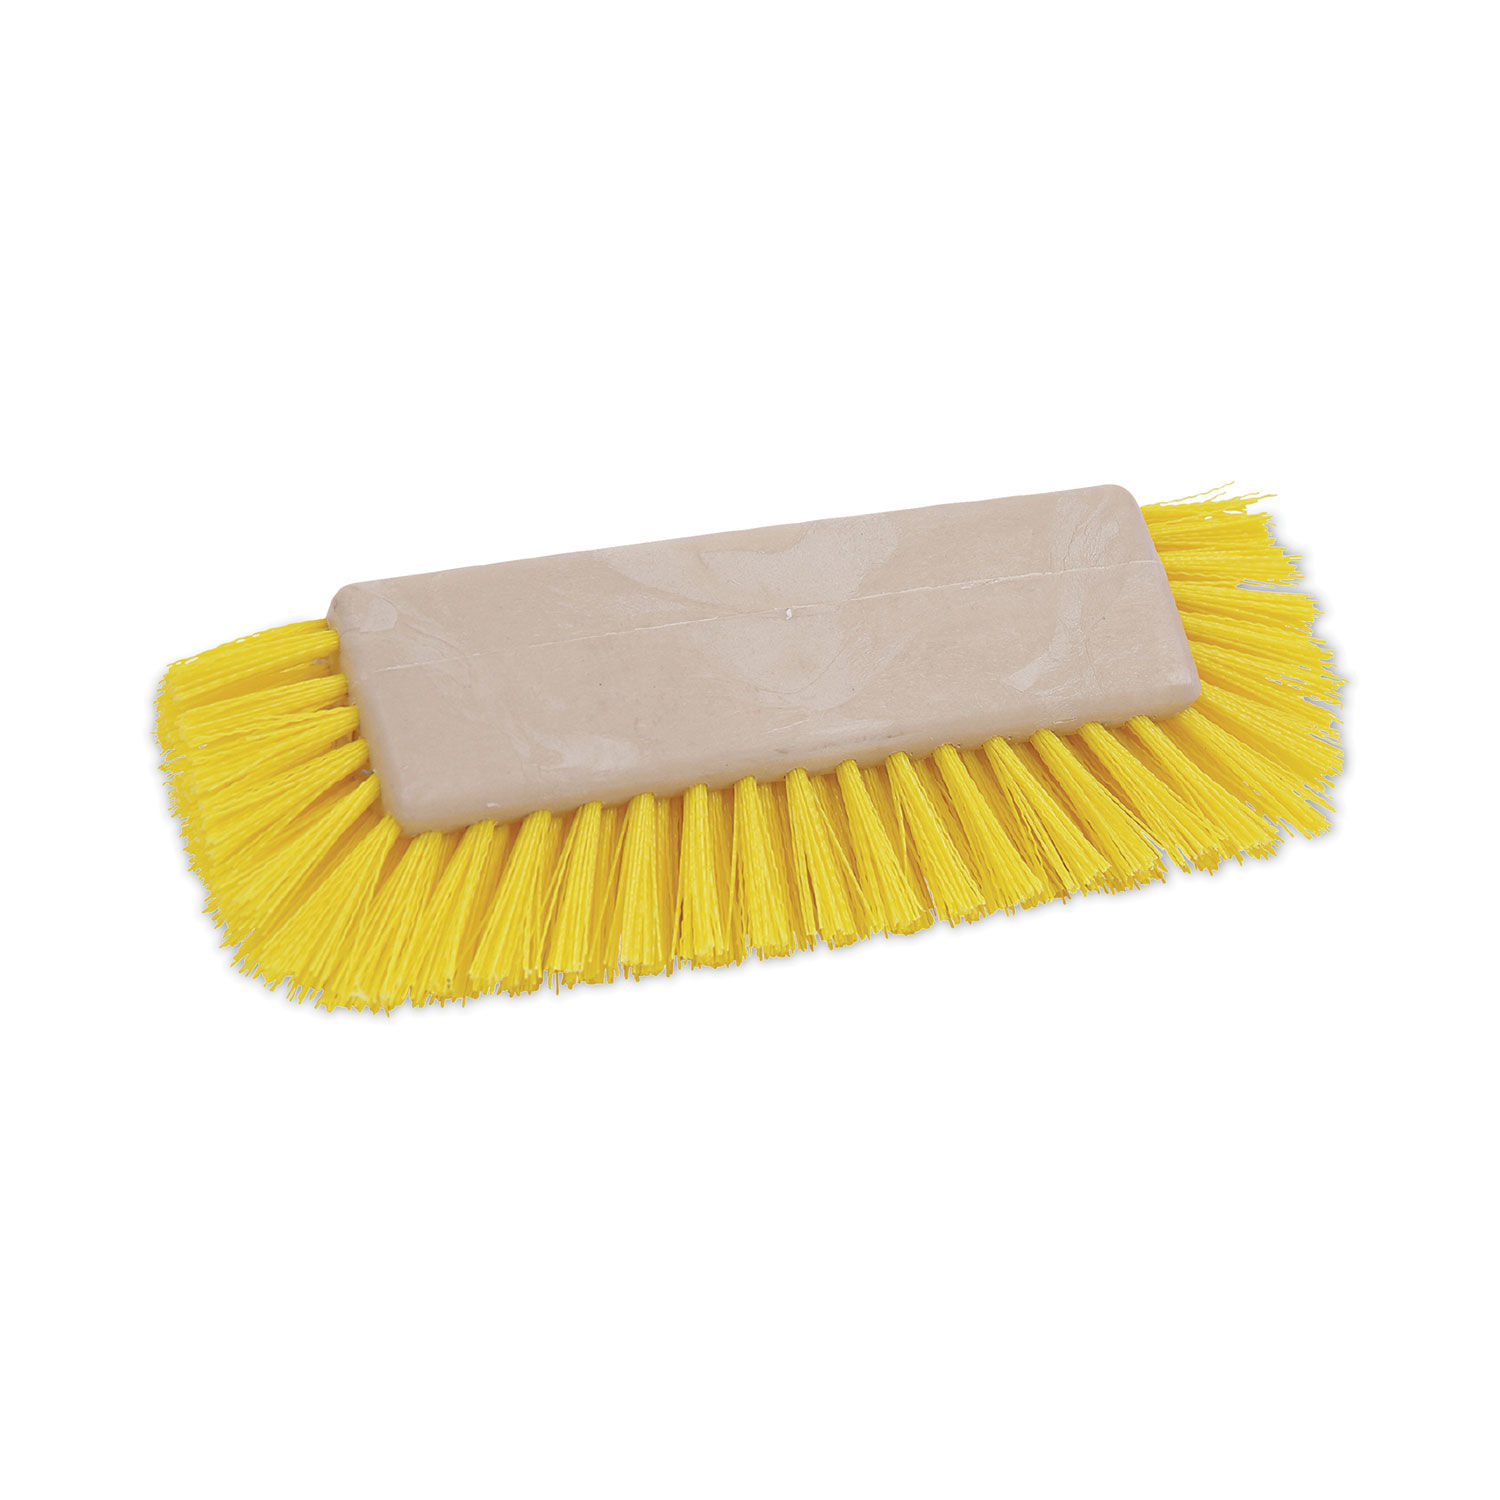 Dual-Surface Scrub Brush Yellow Polypropylene Bristles, 10" Brush, Plastic Handle